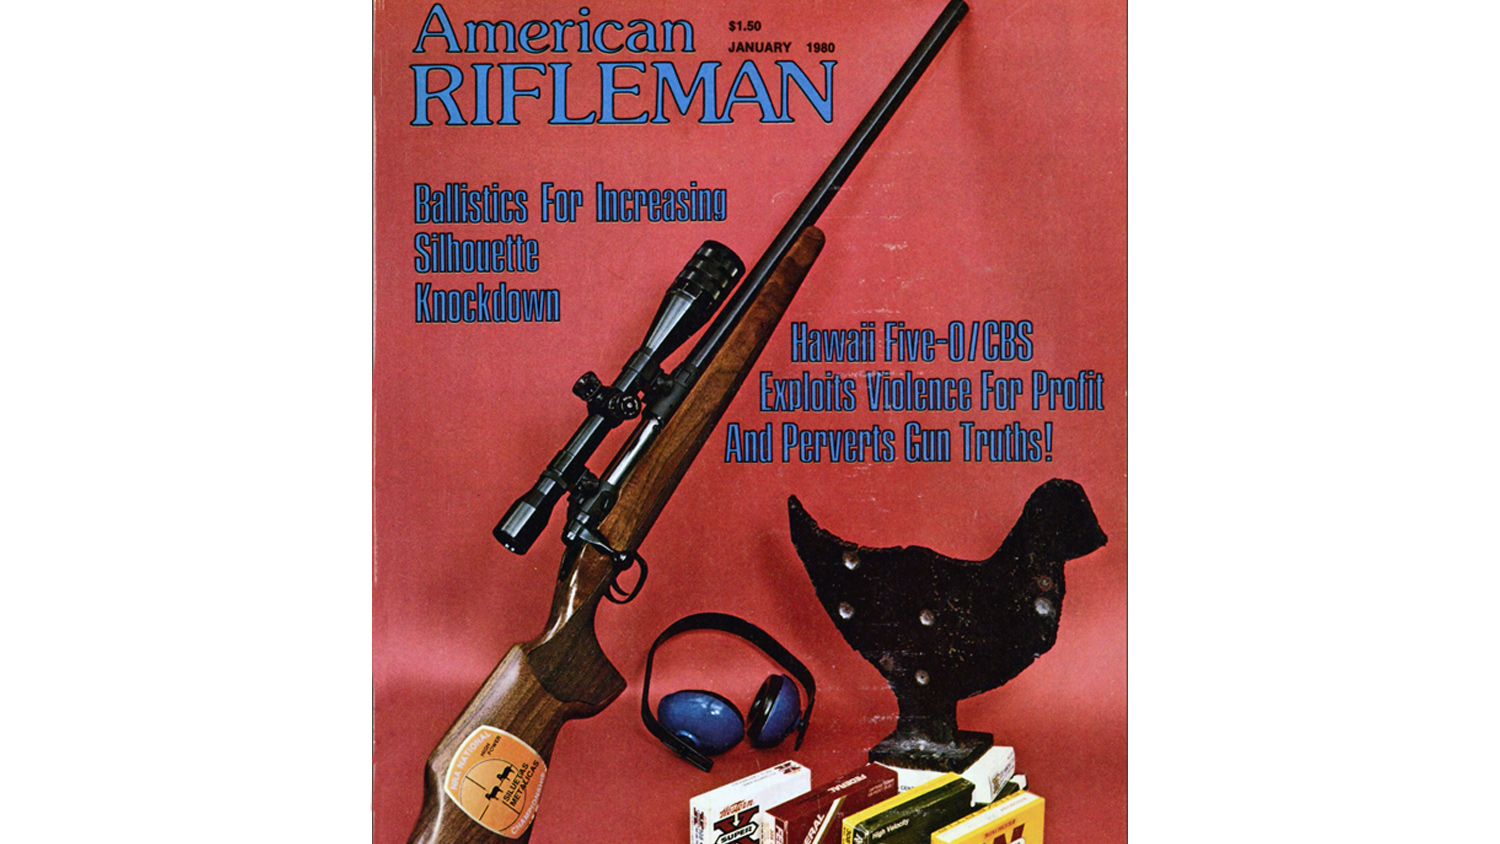 American Rifleman, Jan. 1980 cover